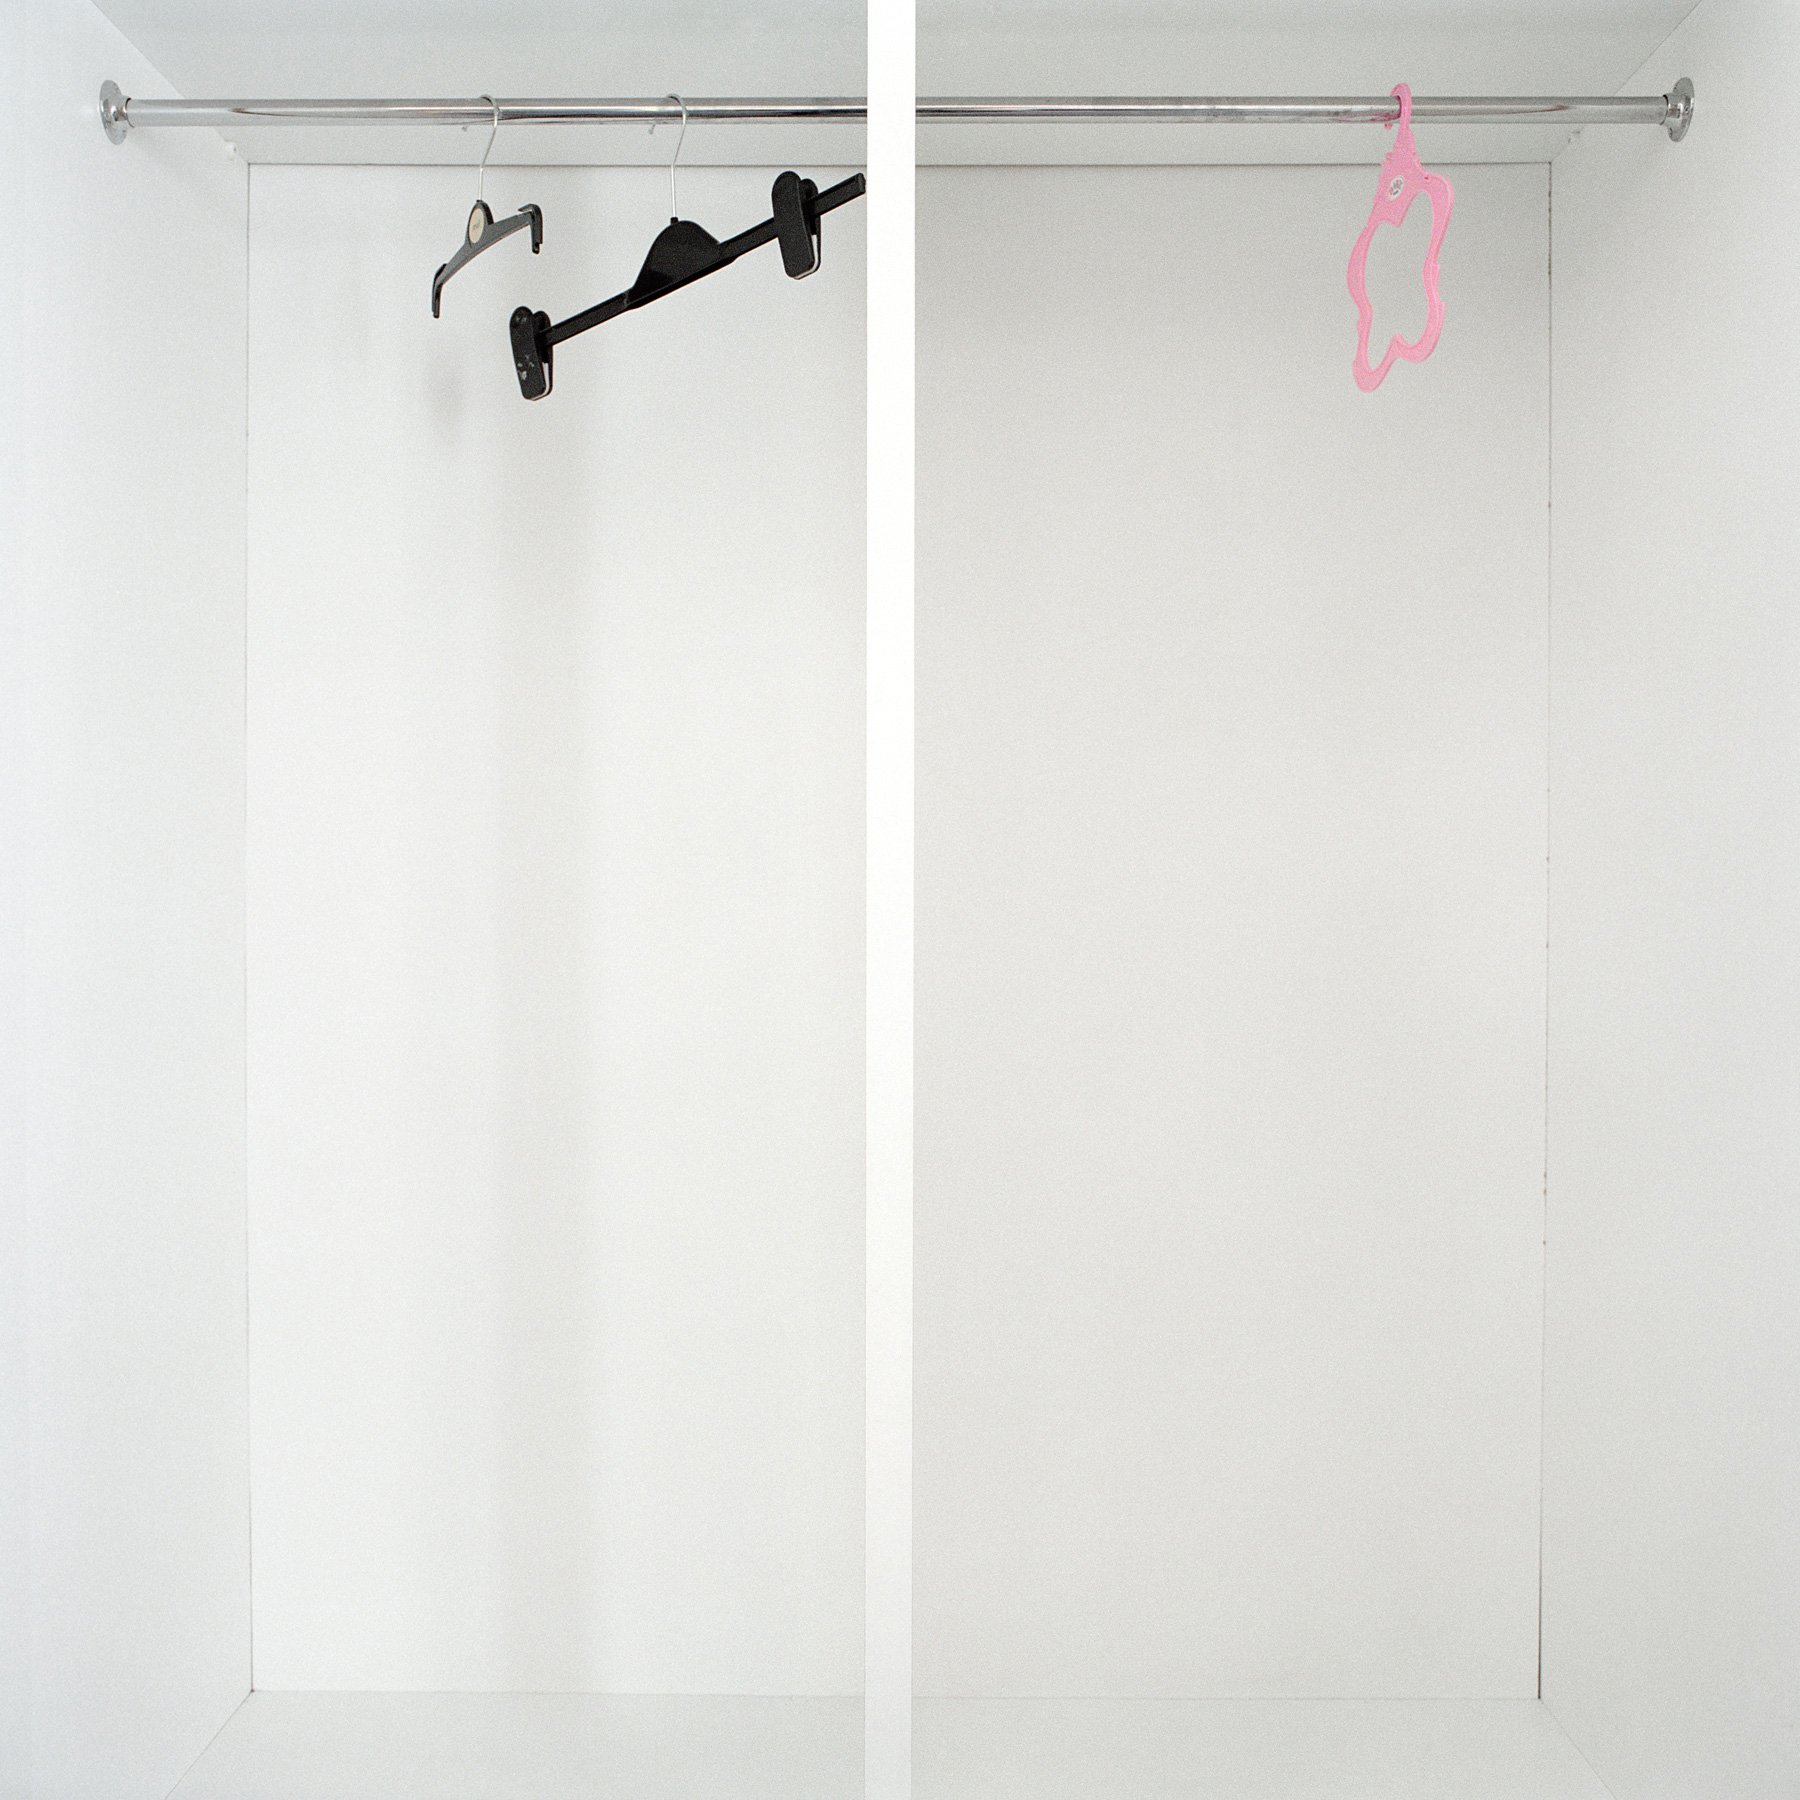 Joanne Mullin, Untitled, 2012, from the series Refuge, 2012_2.jpg